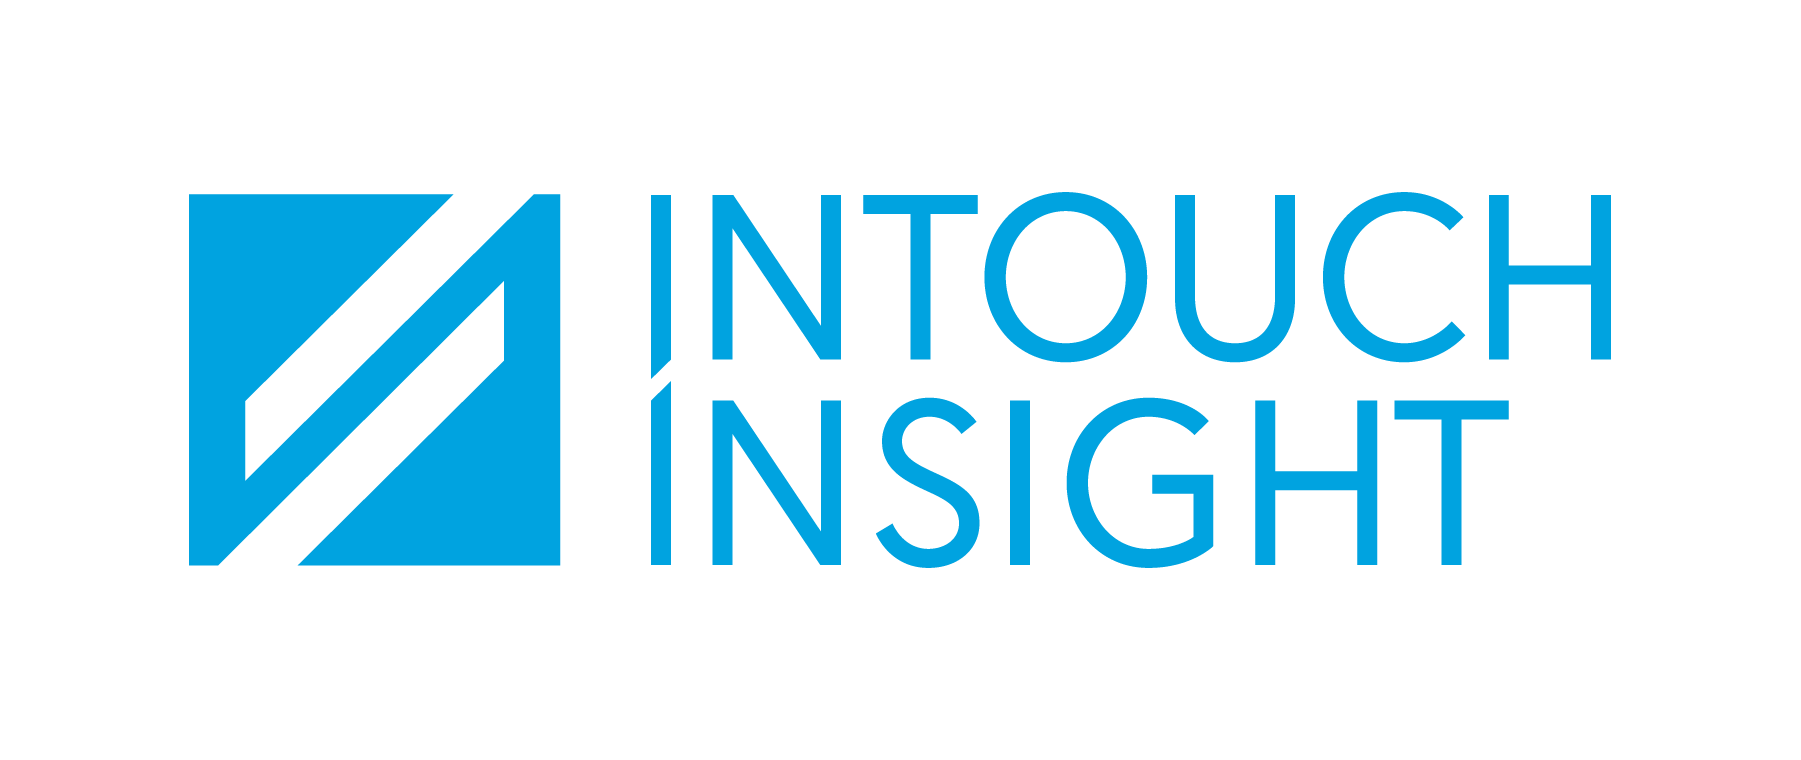 Intouch Insight Logo RGB